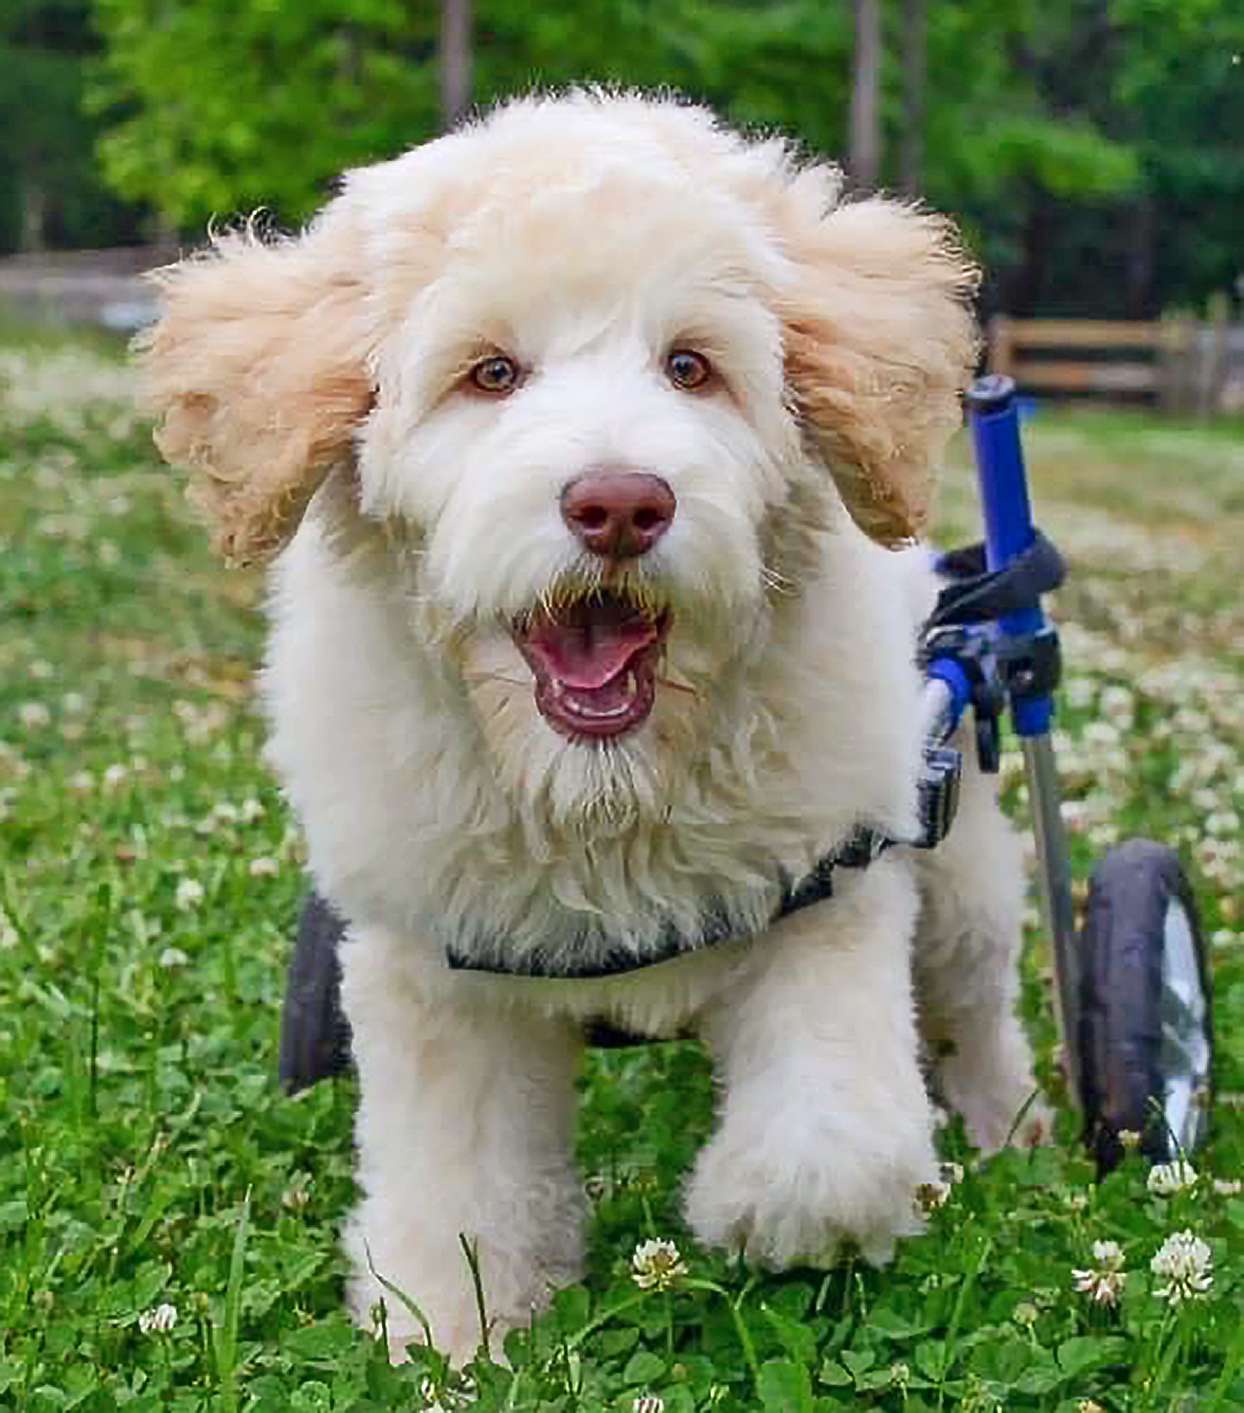 Benny as a puppy, running through clover in his wheelchair